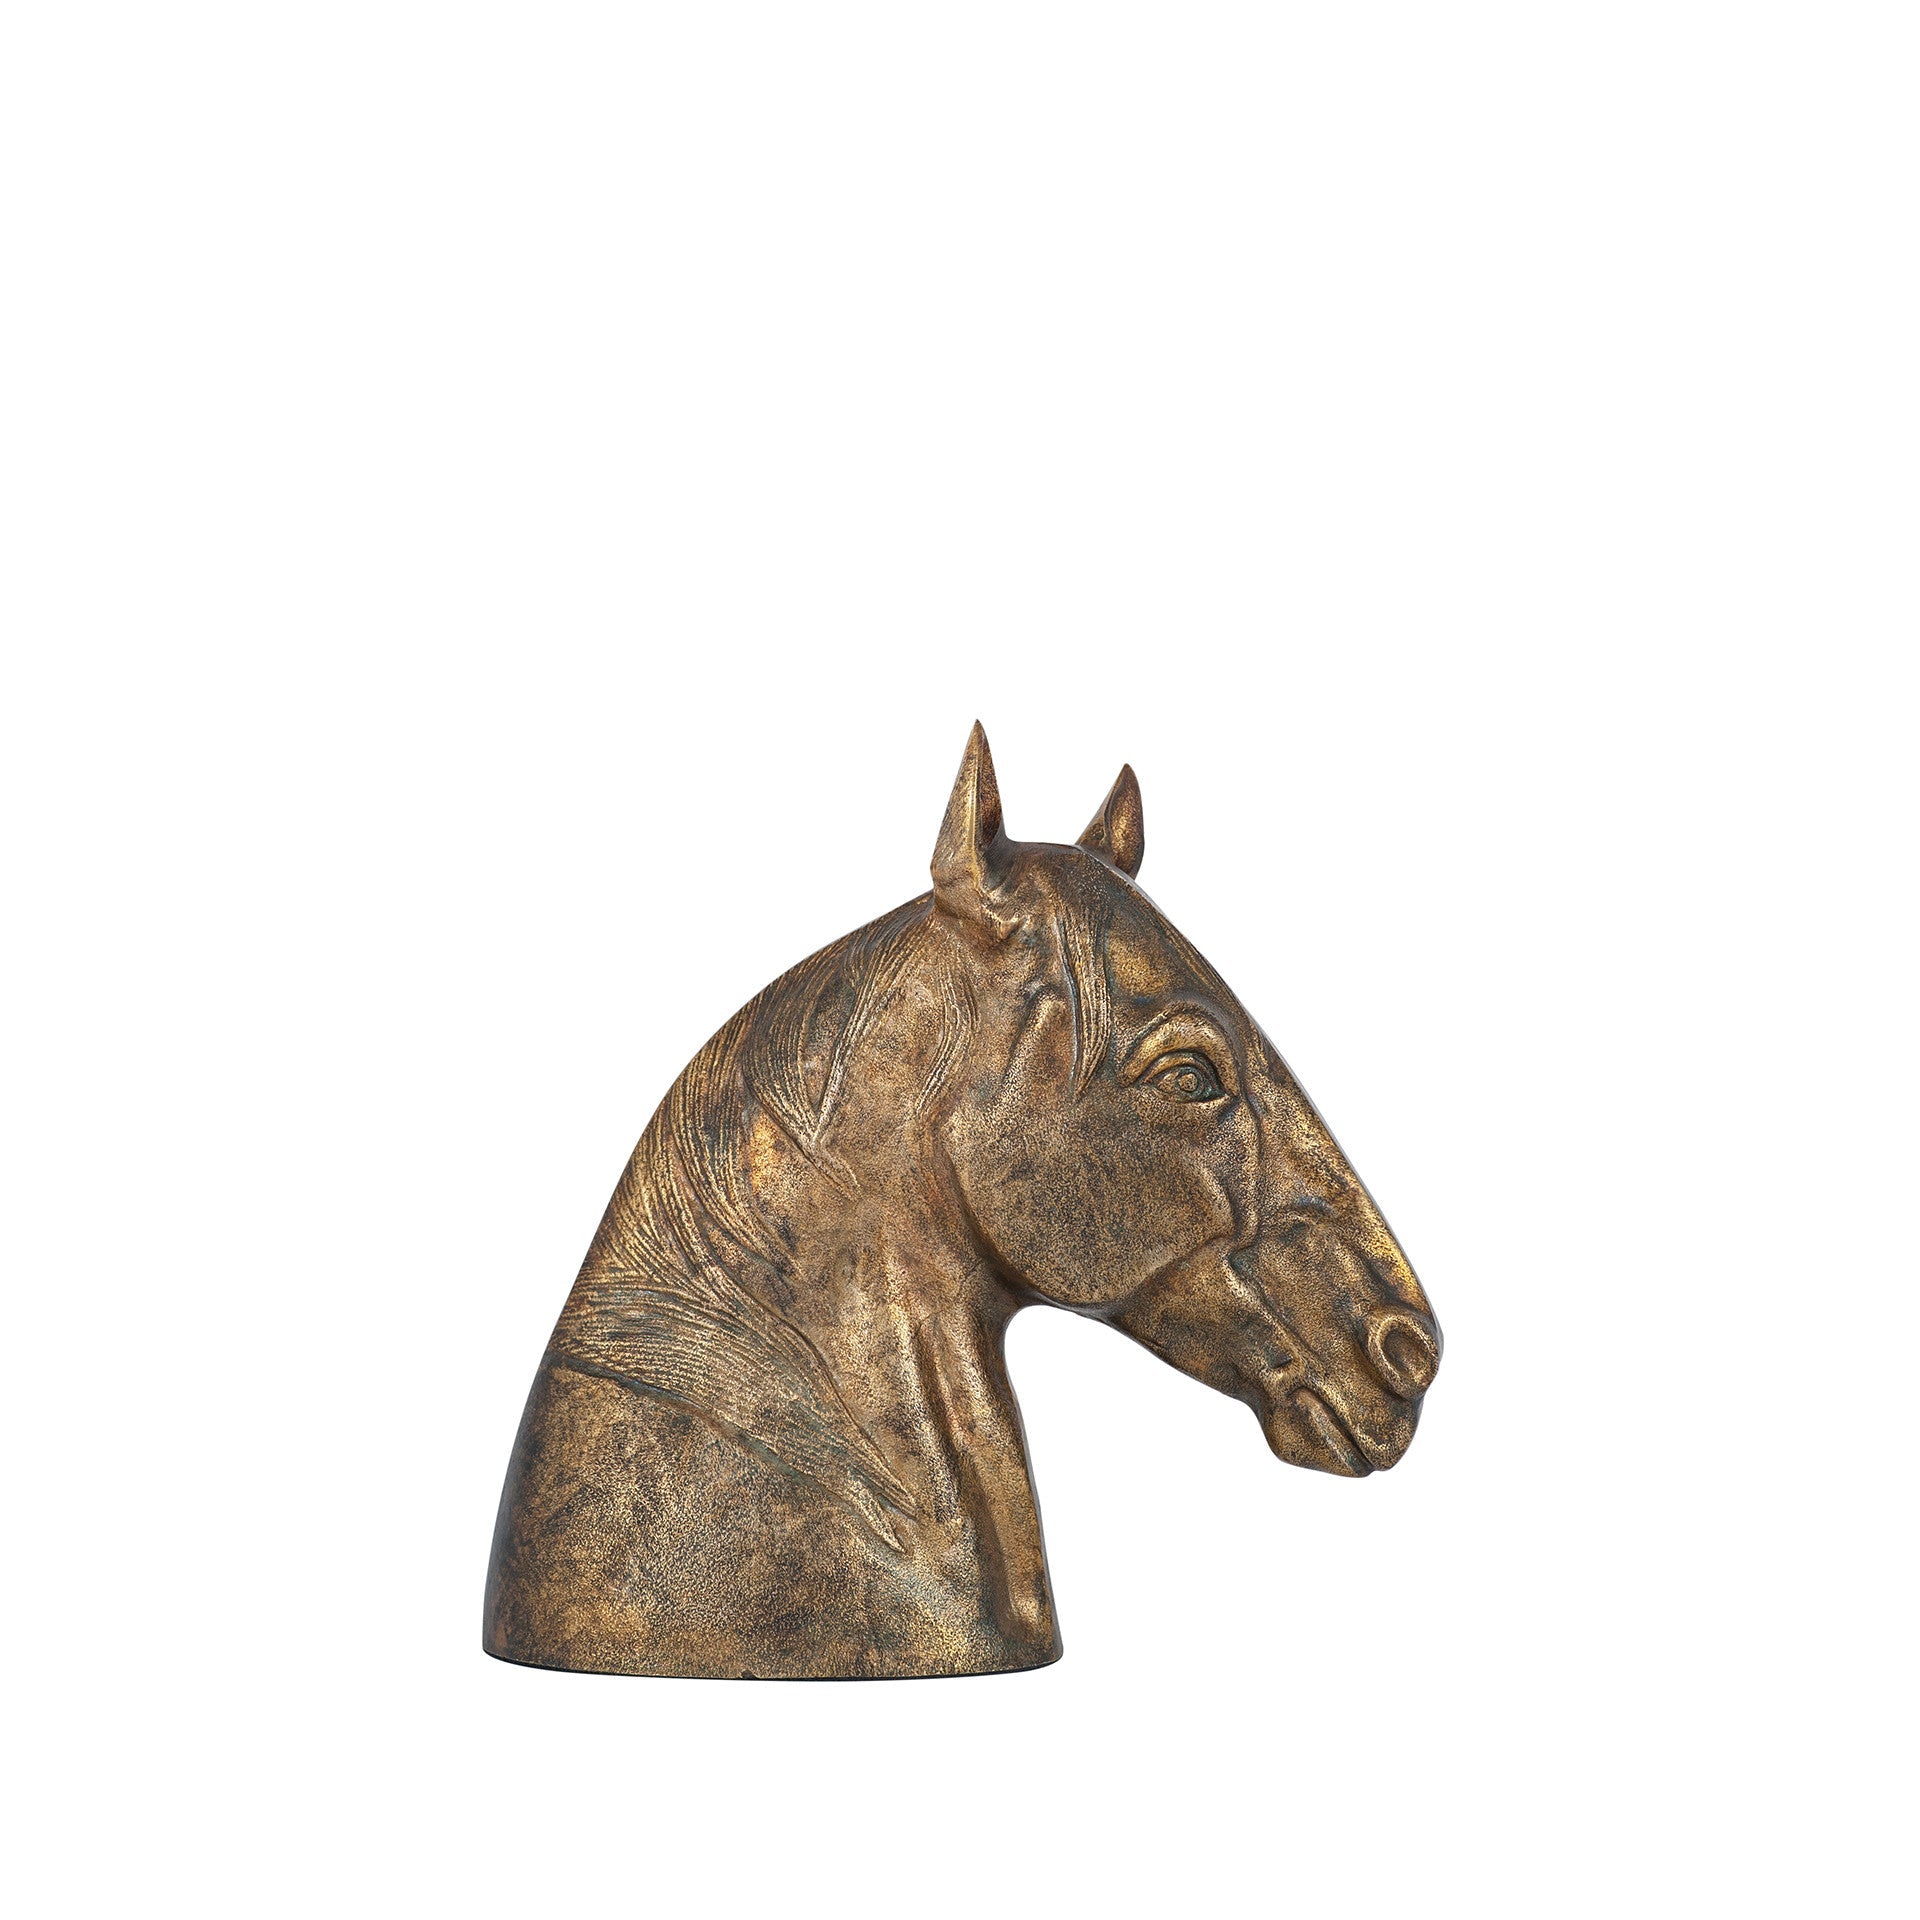 Antique Gold Metal Horse Head